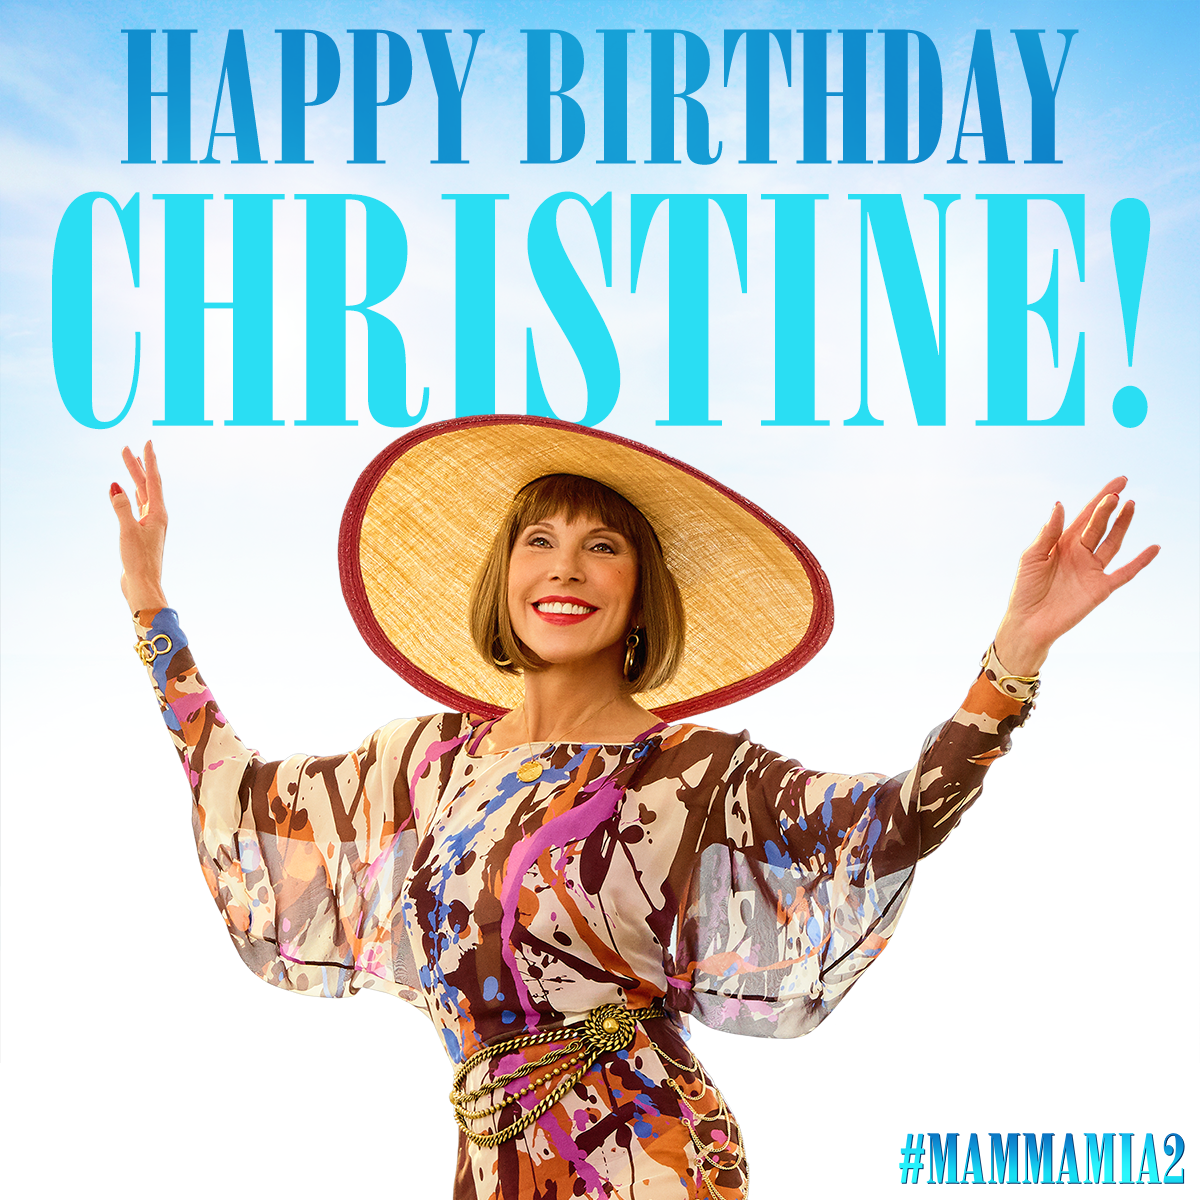 Happy birthday to the fabulous Christine Baranski! 